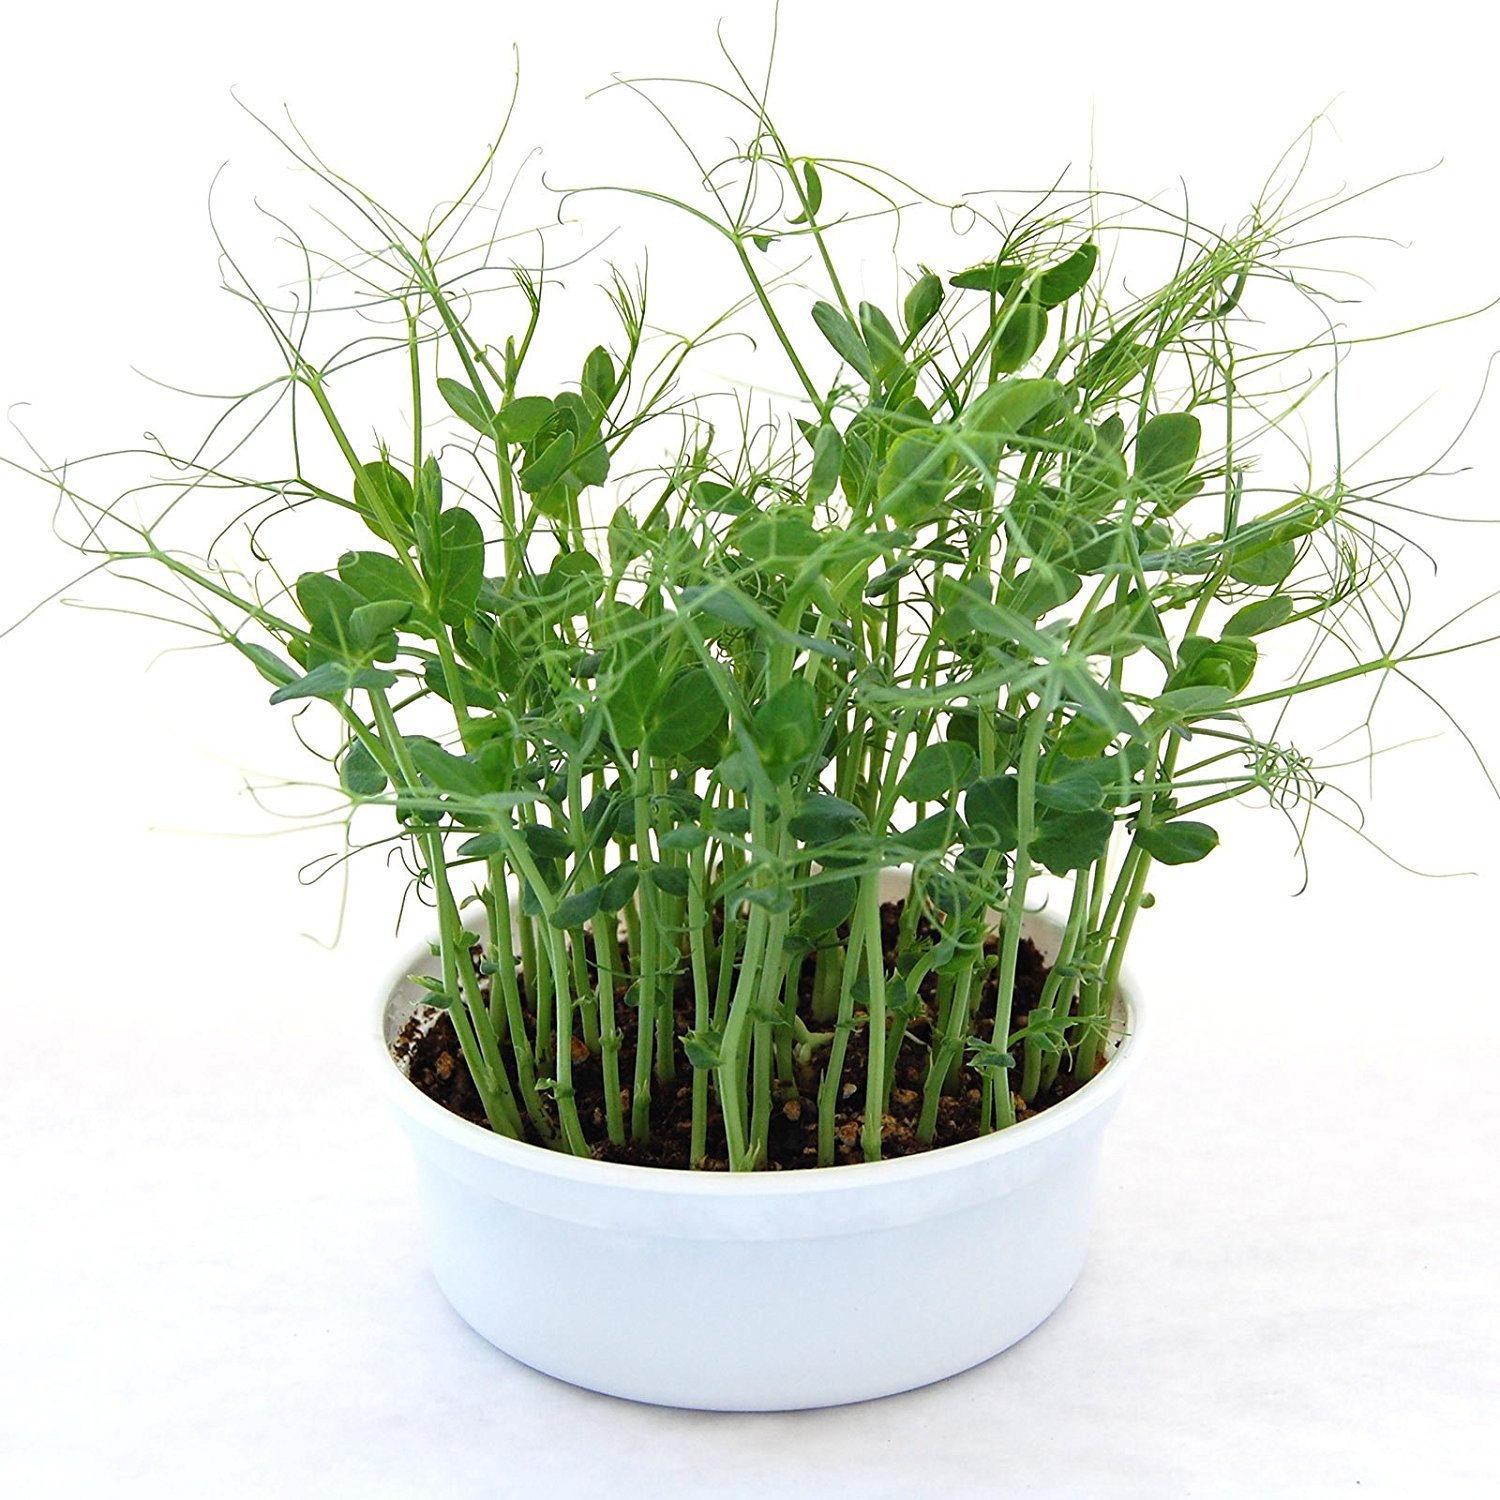 Mini Microgreens Growing Kit - Pea Shoots - Grow Your Own Organic Gourmet Micro Greens Indoors: Salad, Sandwich & Garnish - Easy & Fun - Great Gift or Stocking Stuffer - image 3 of 3